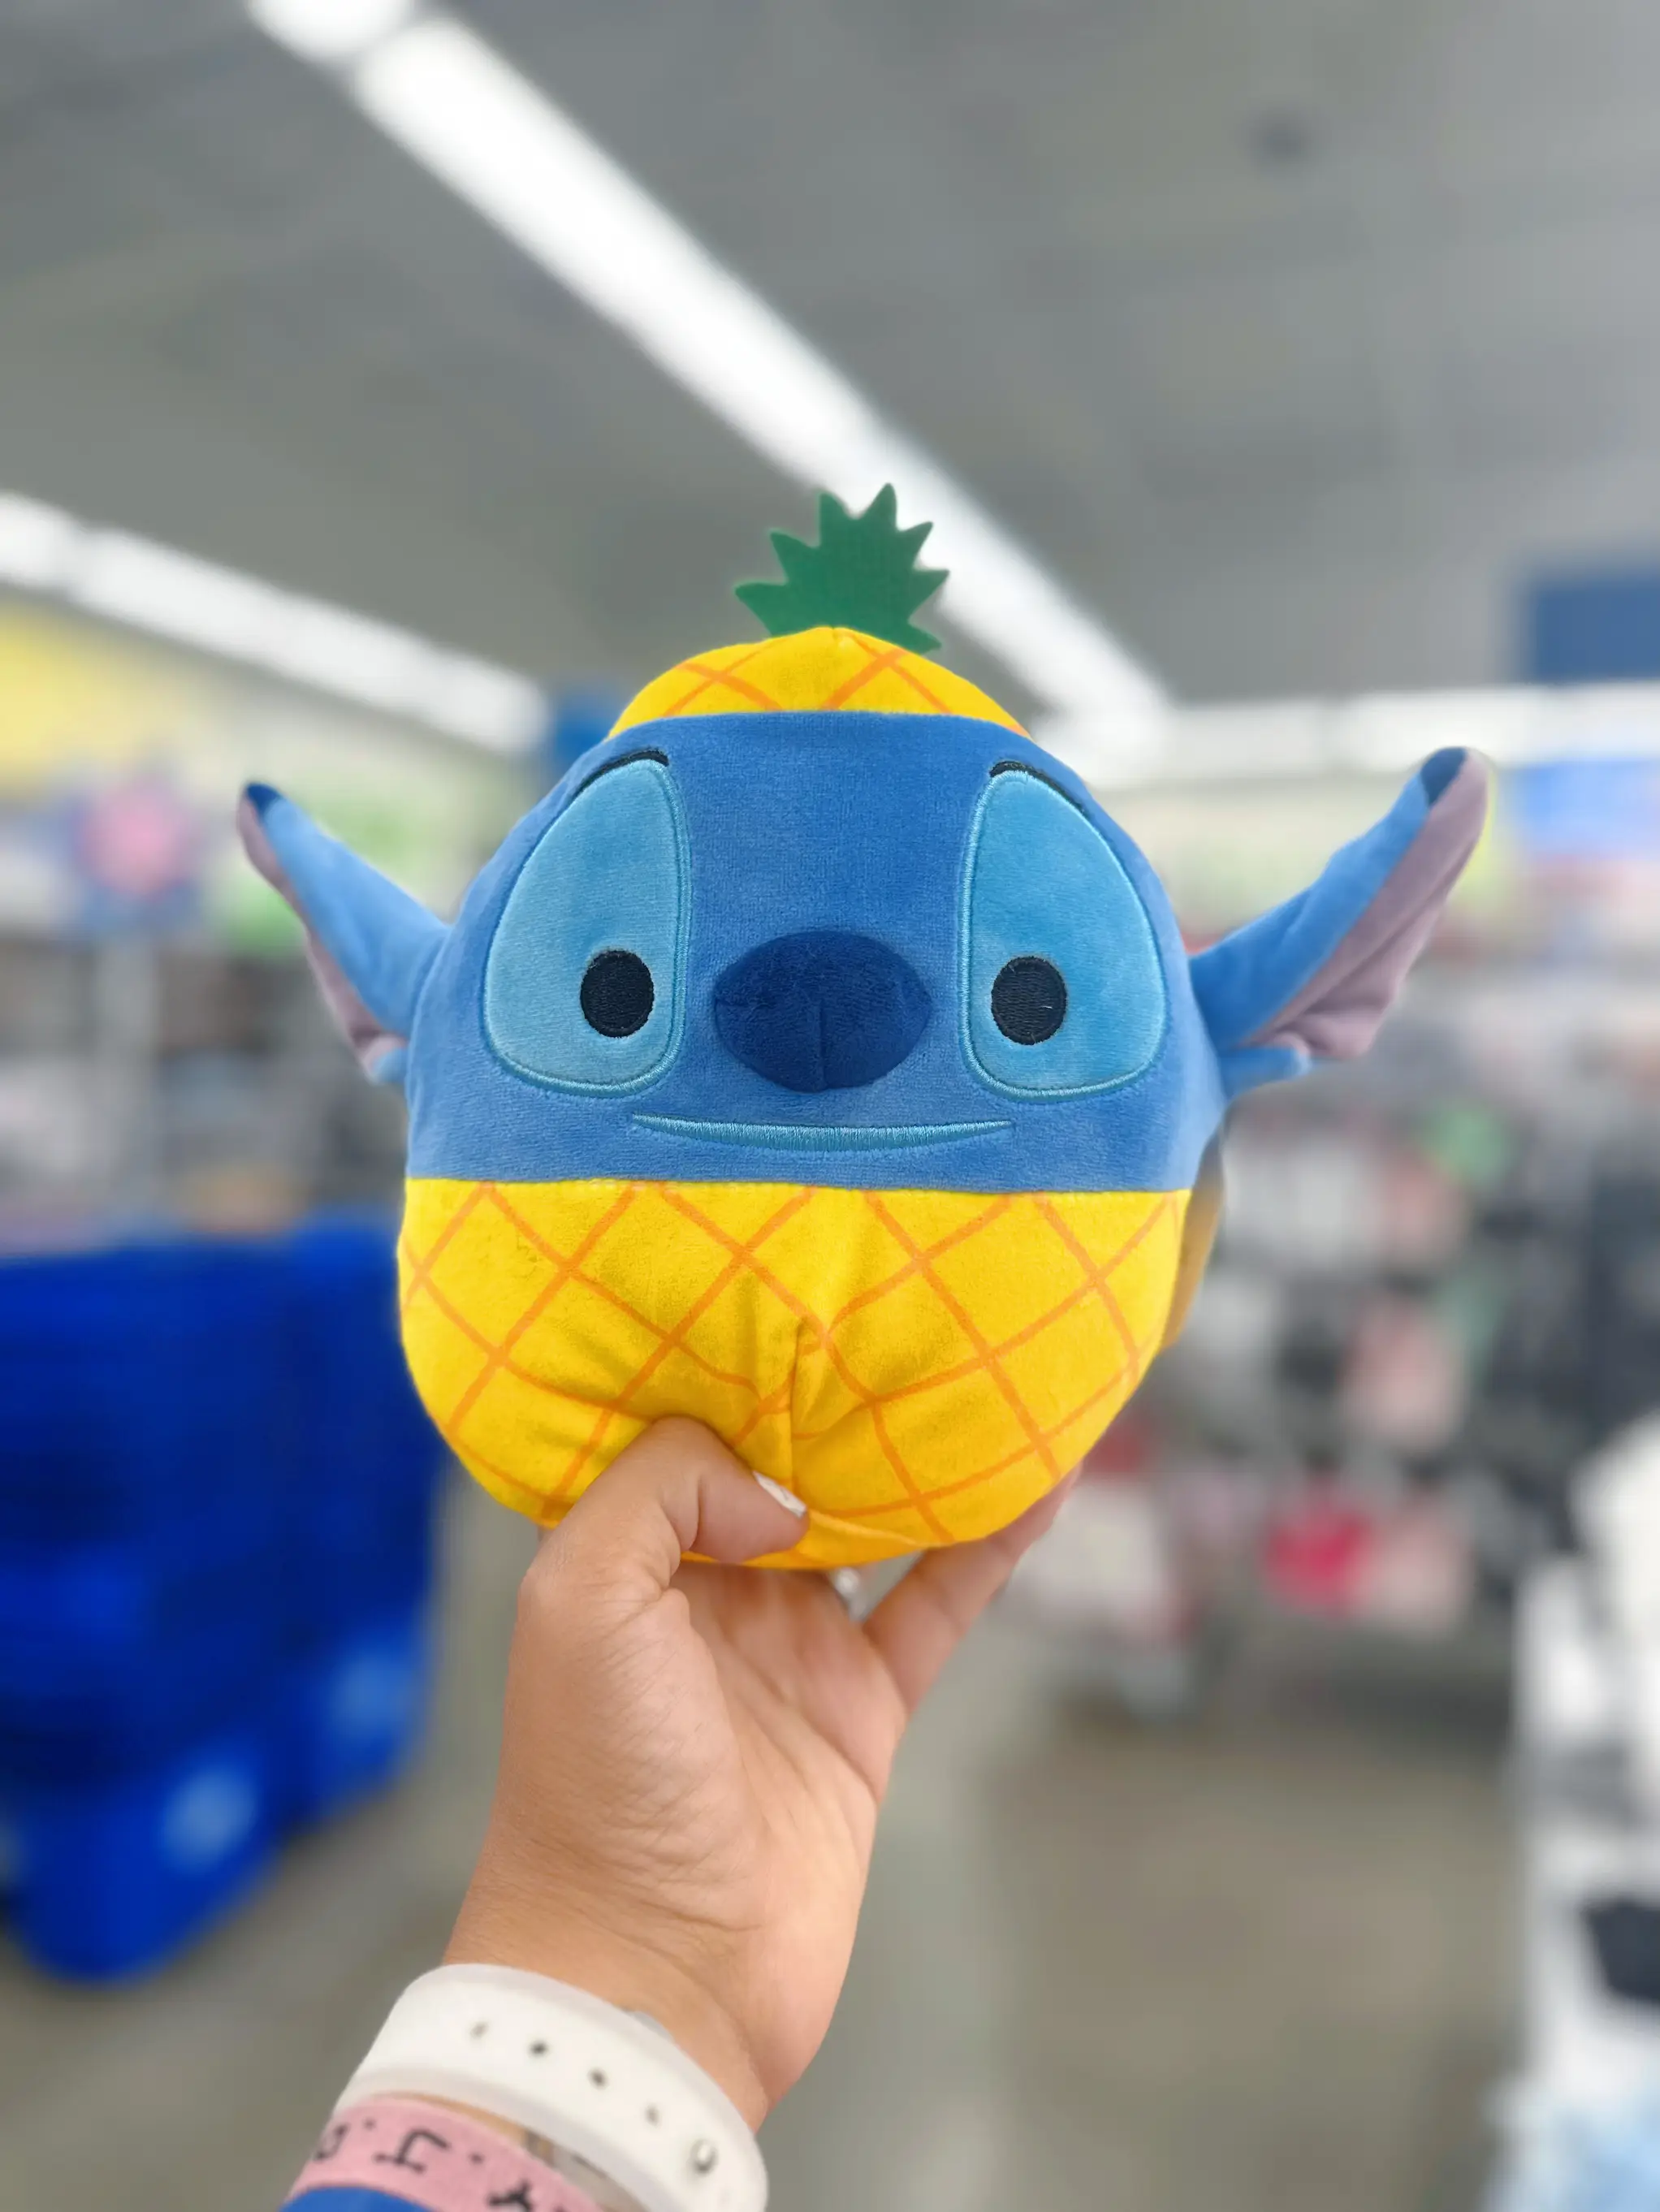 rare Disney Lilo and Stitch merchandise - Lemon8 Search